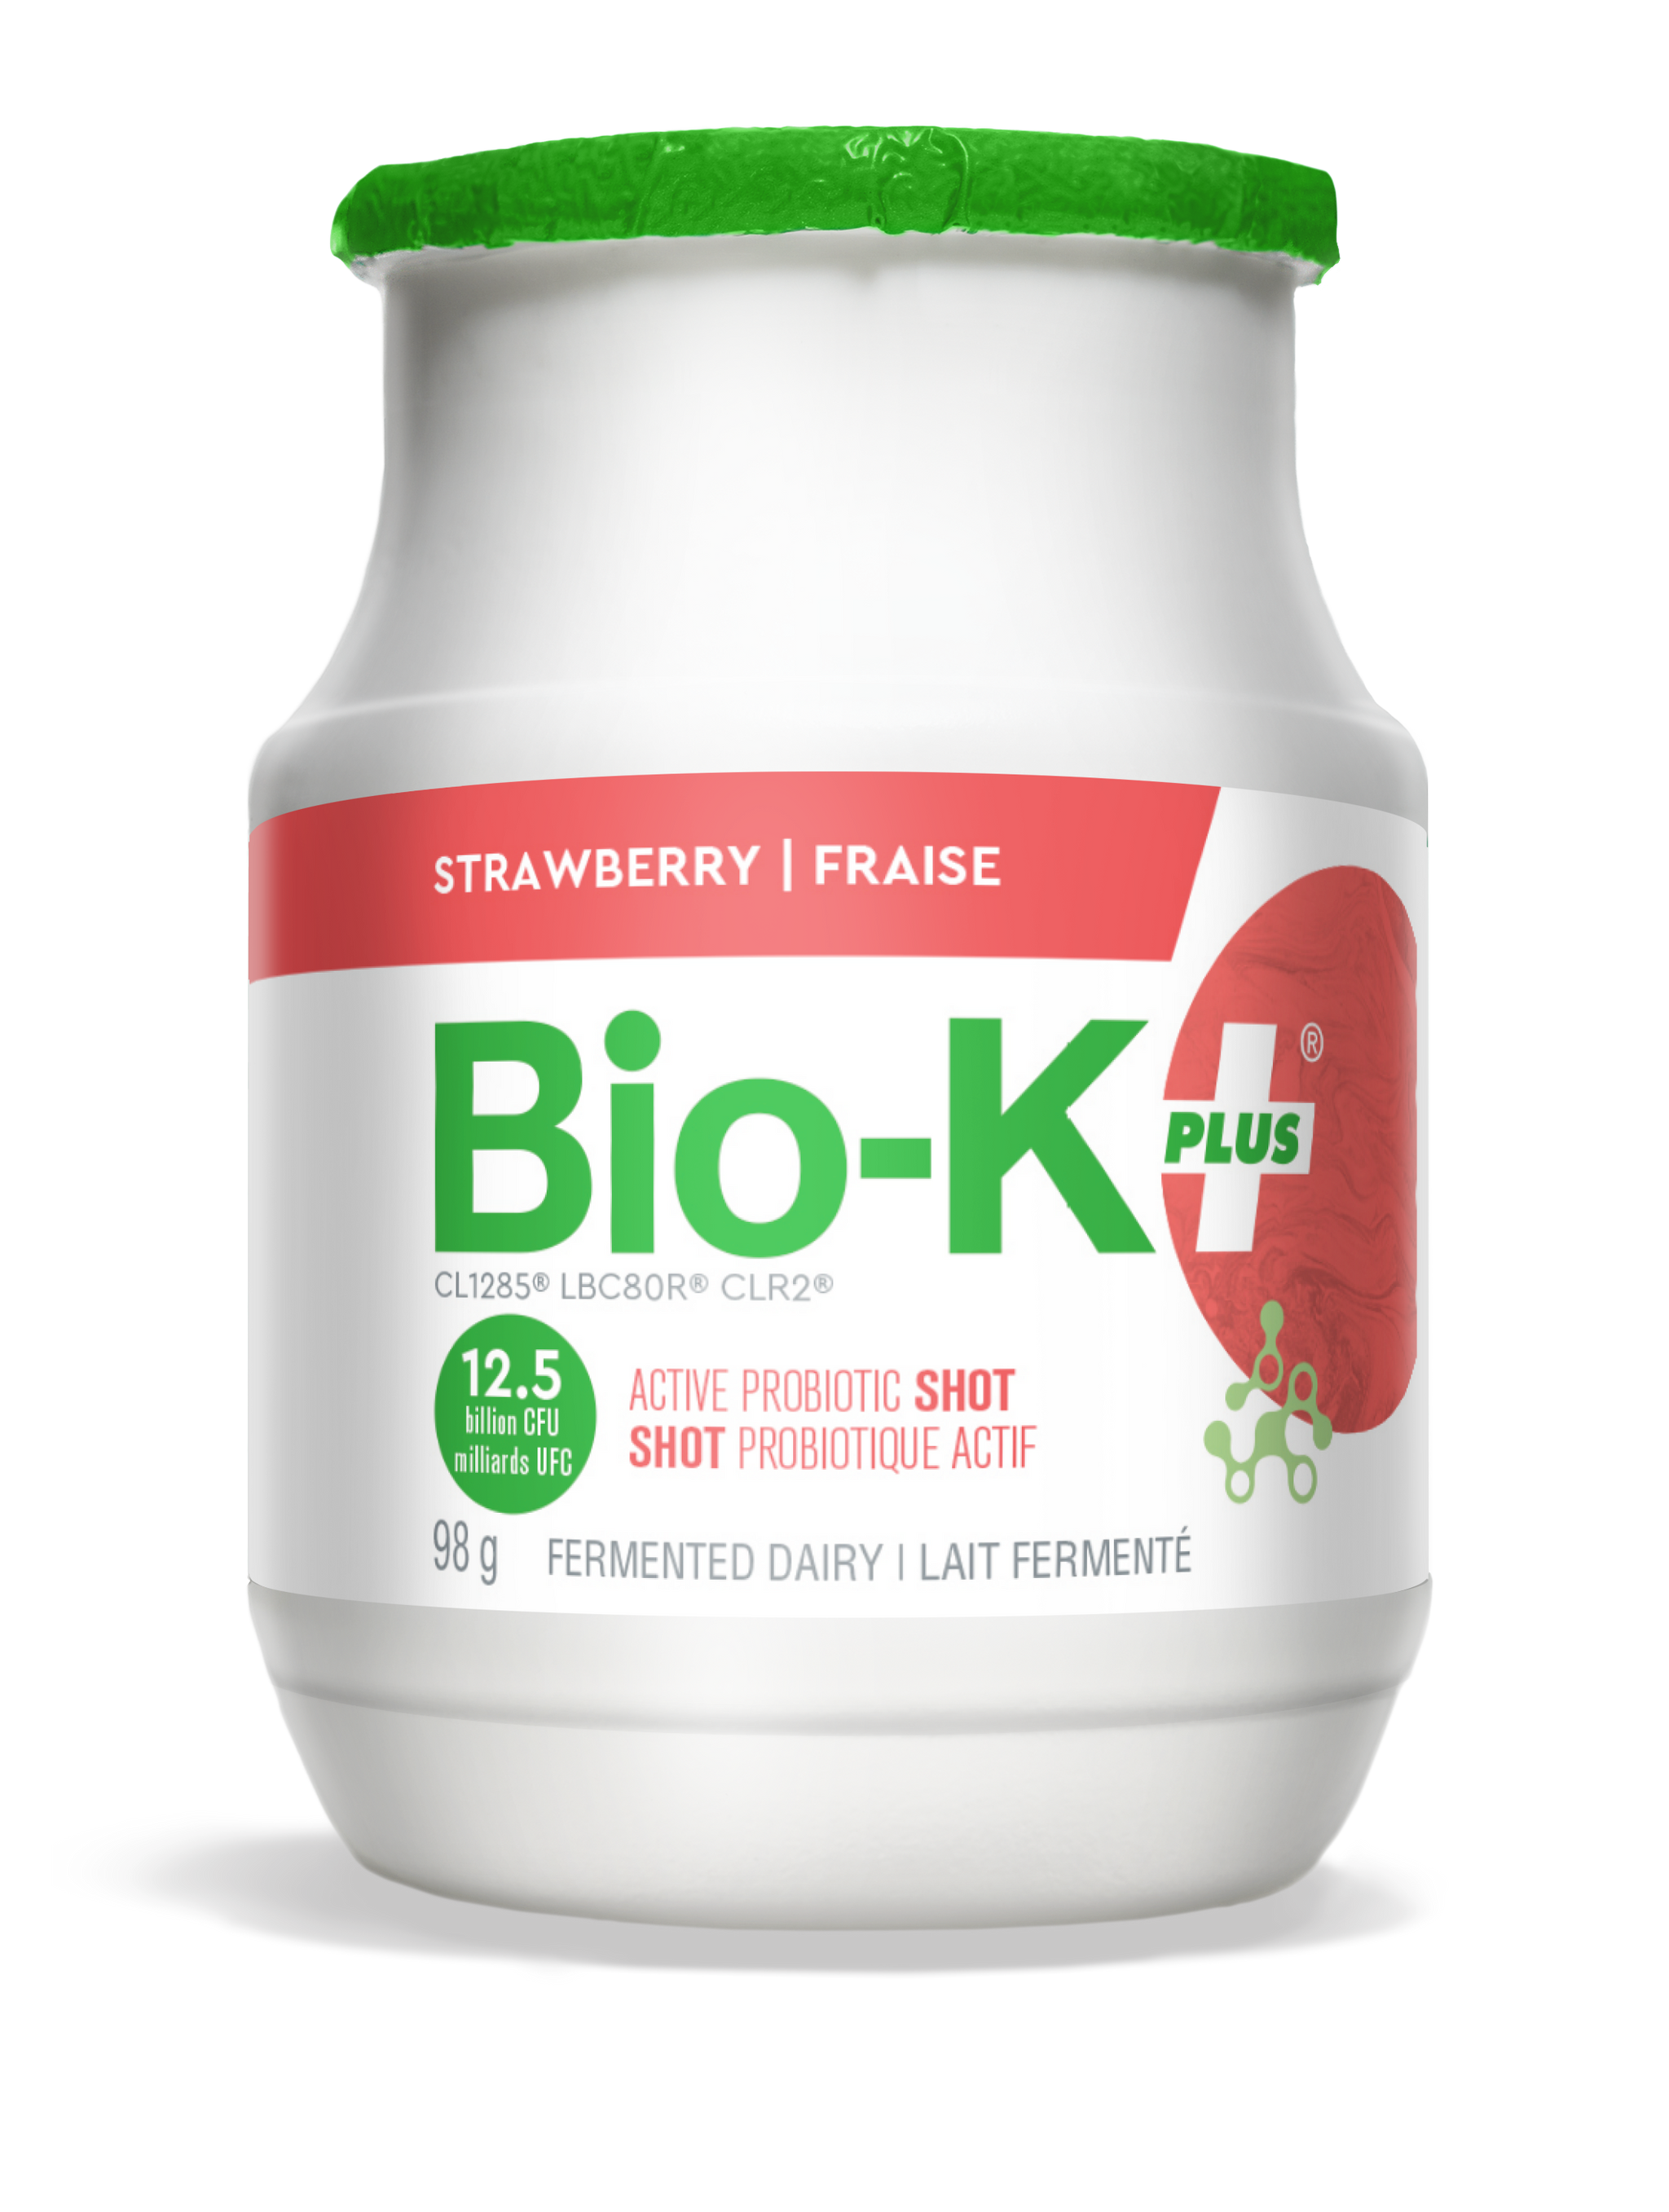 Bottle of Bio-K+ wellness shot - Strawberry flavor